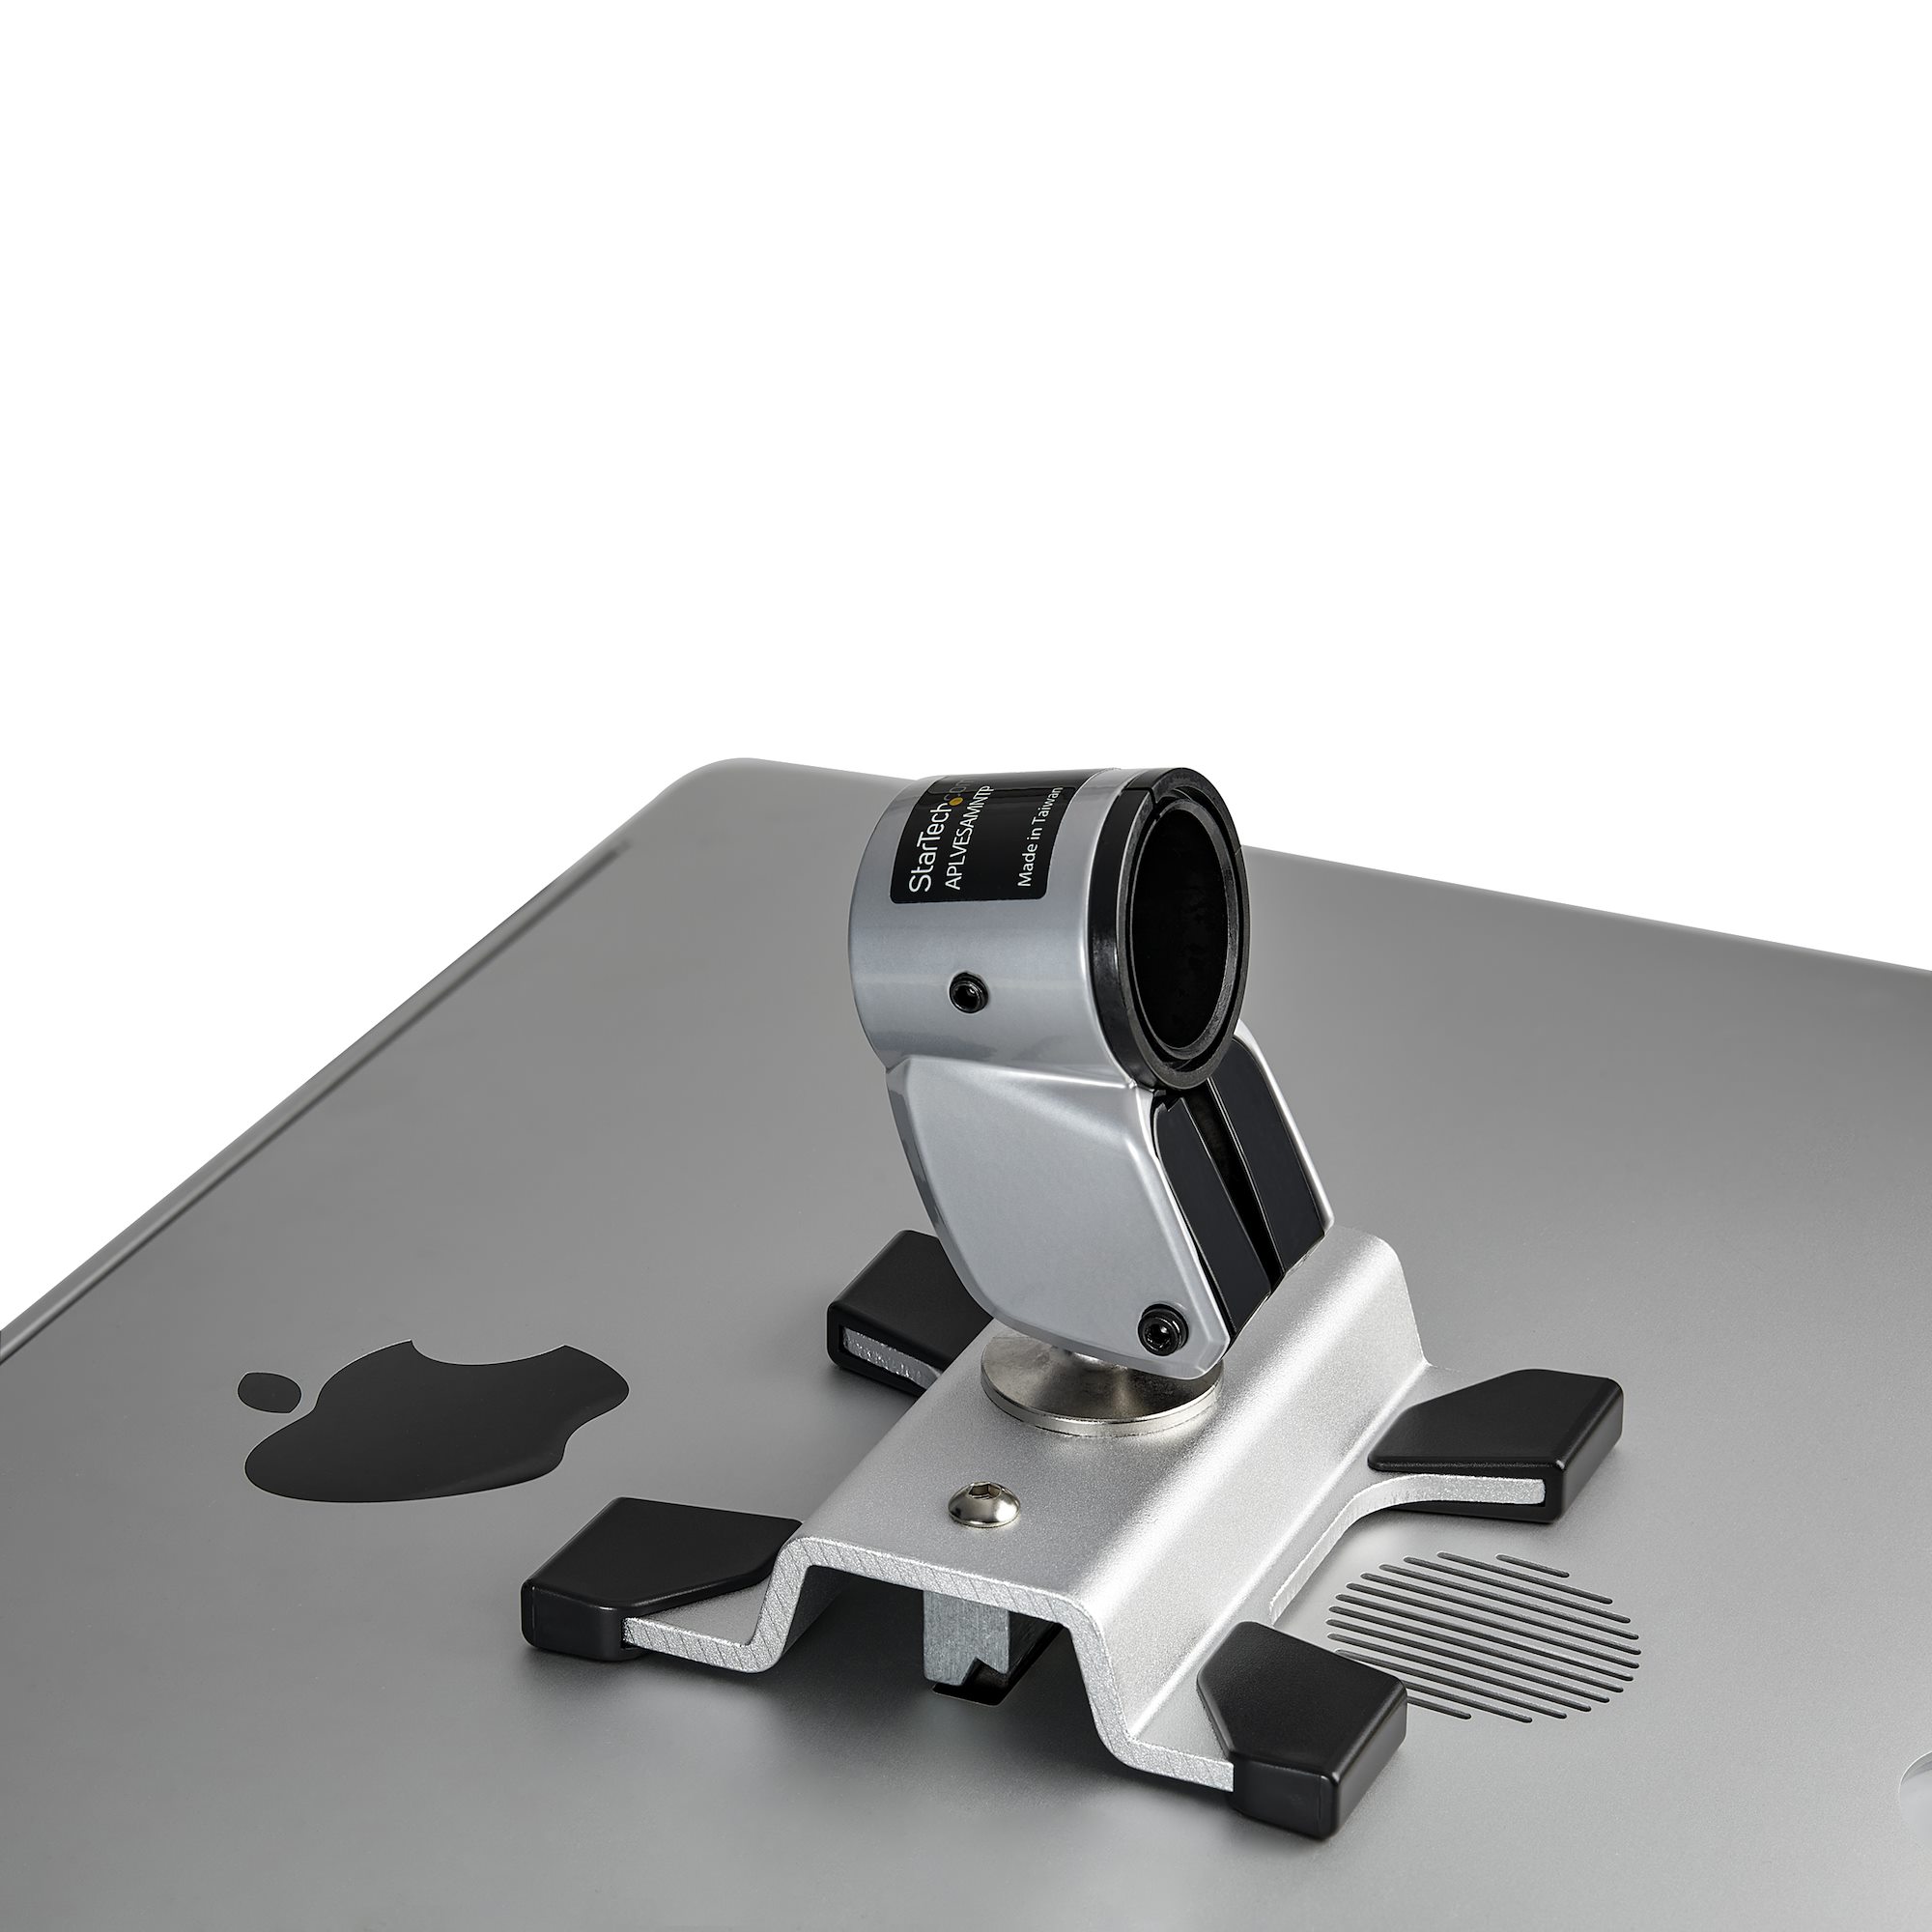 Buy VESA Mount Adapter Kit for iMac Pro - Apple